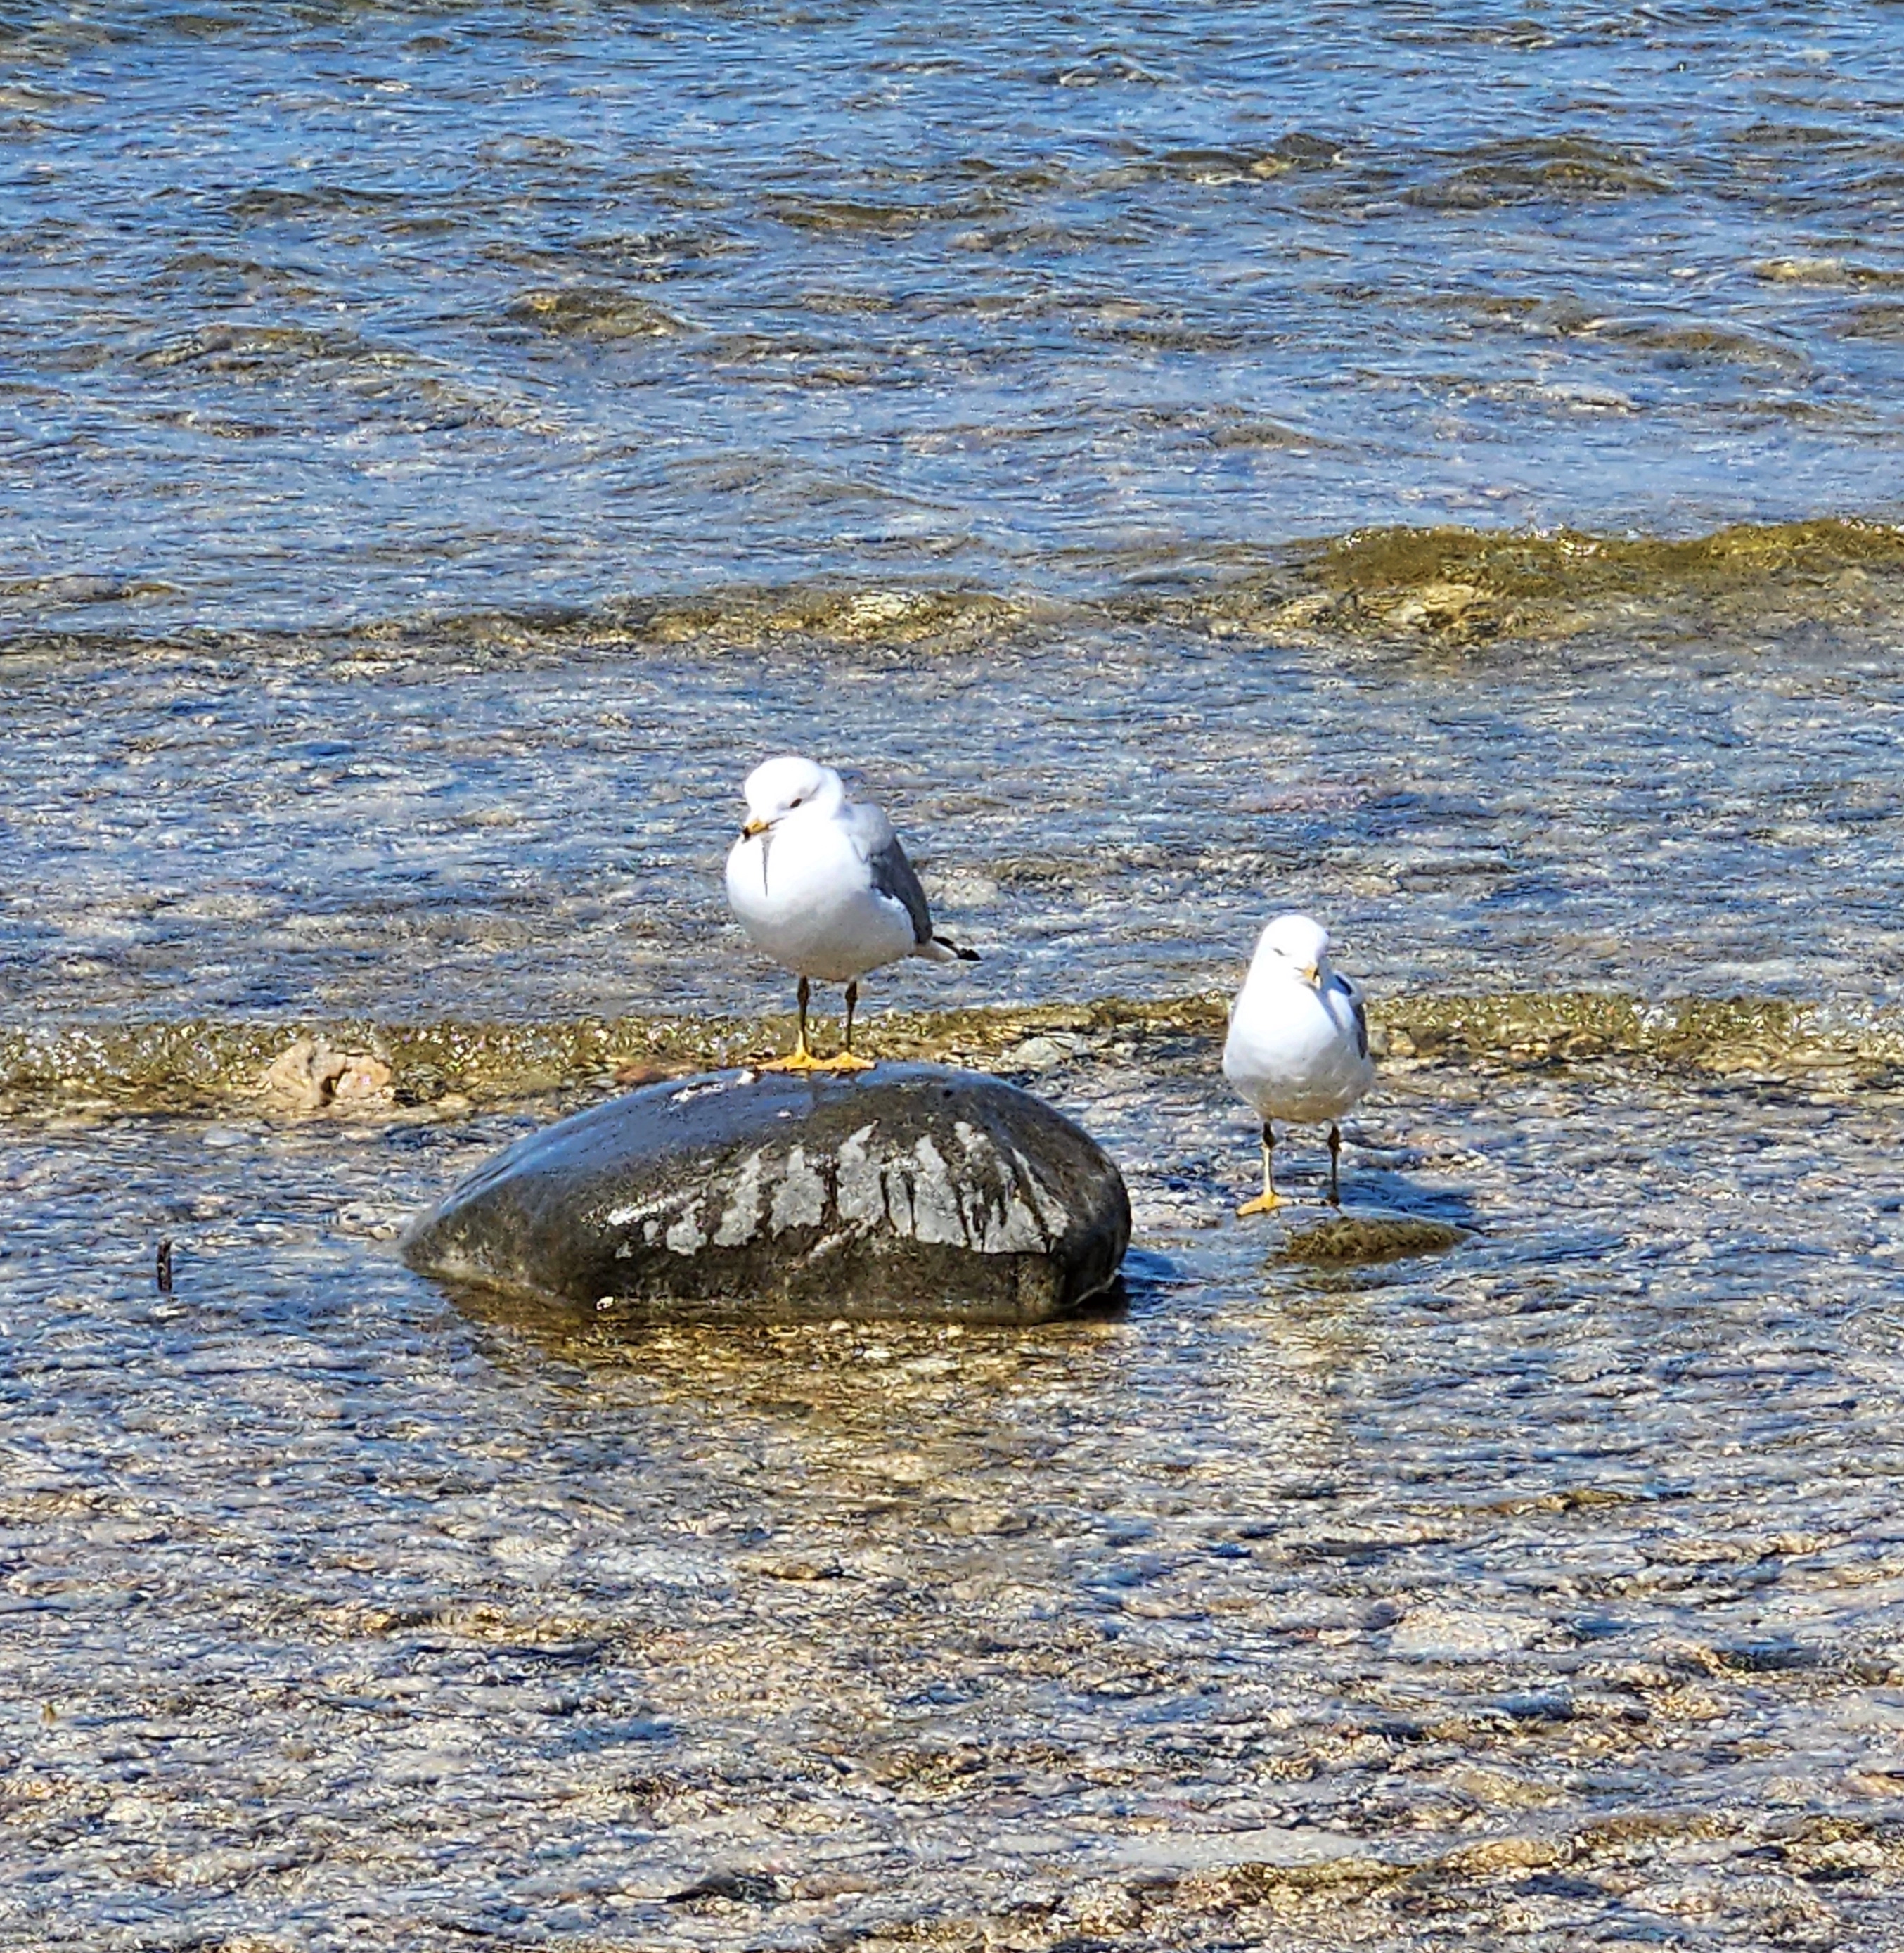 Fisherman's Island State Park Seagulls